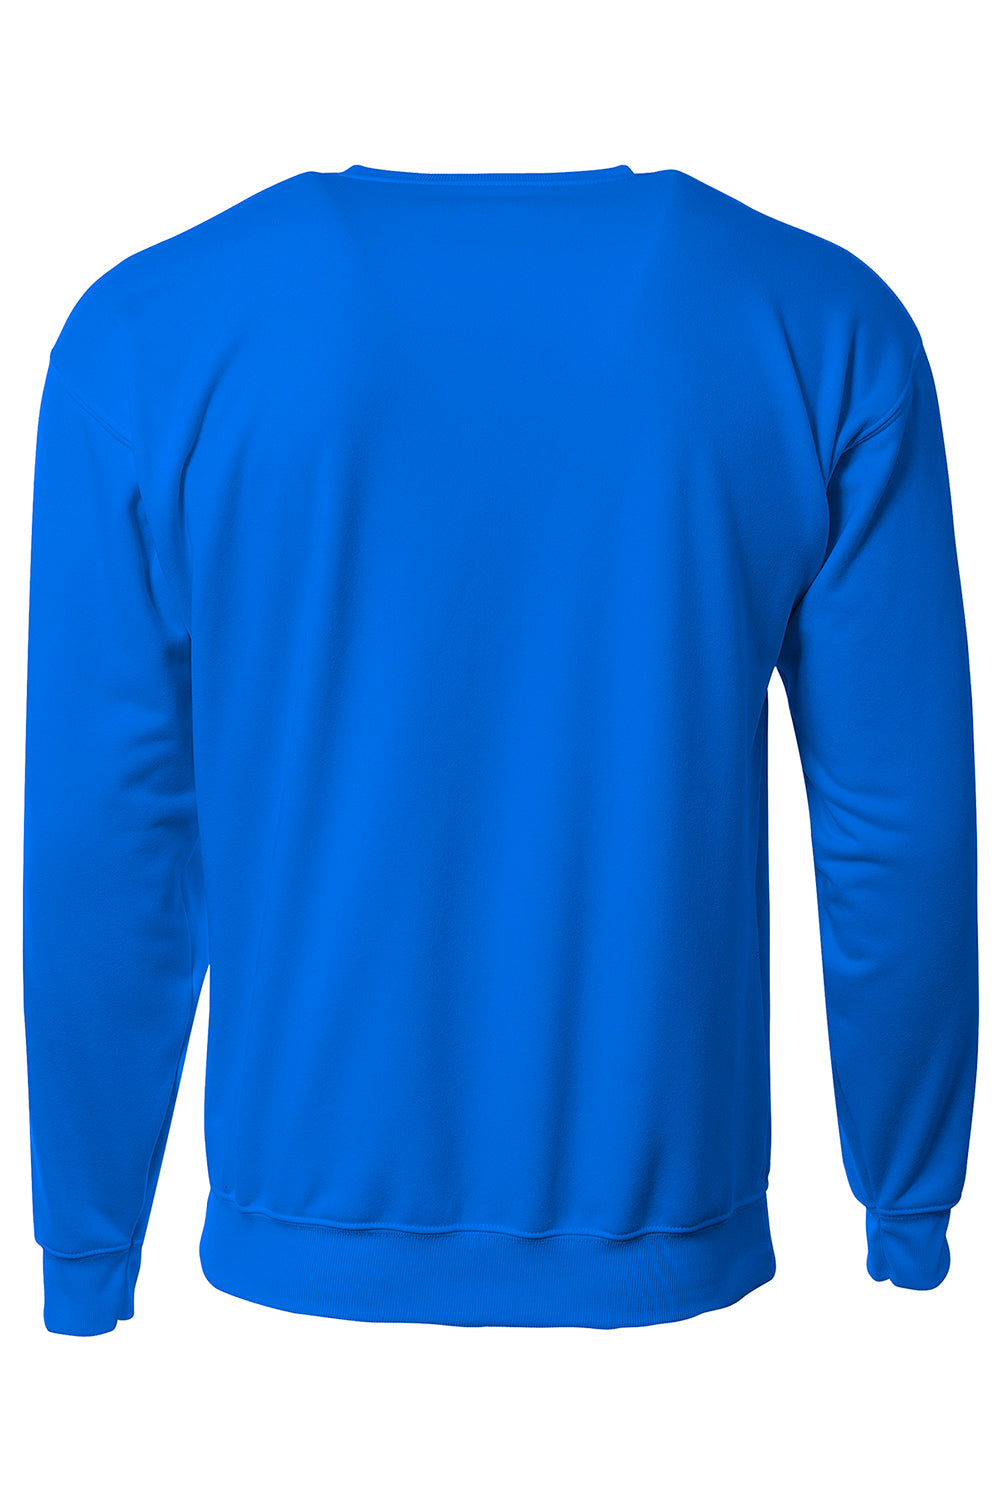 A4 N4275 Mens Sprint Tech Fleece Crewneck Sweatshirt Royal Blue Flat Back